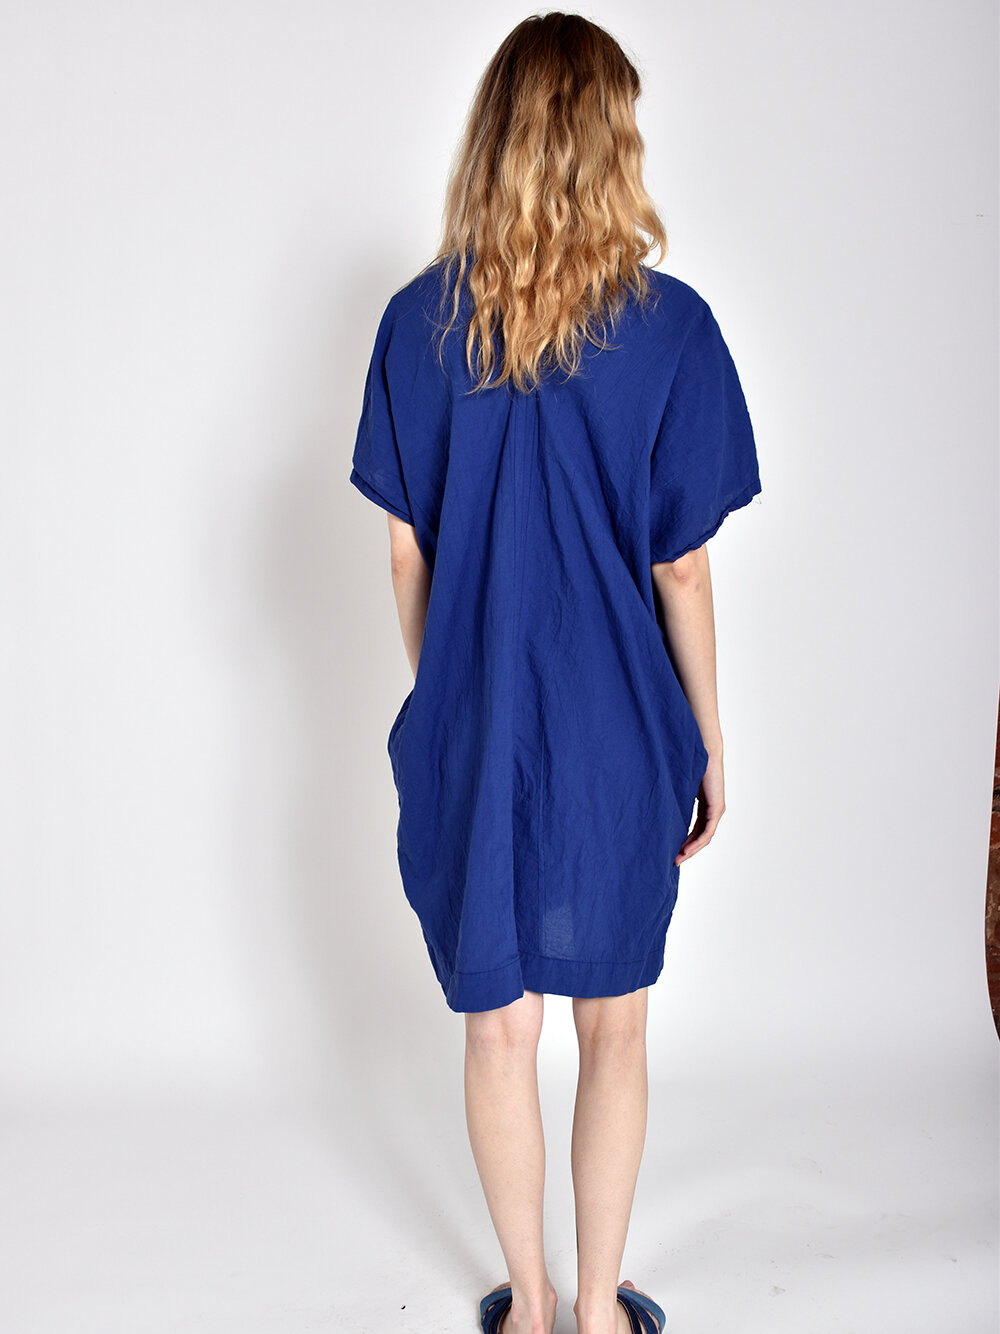 100% cotton V-neck short sleeved dress, made in Brooklyn. — uzinyc